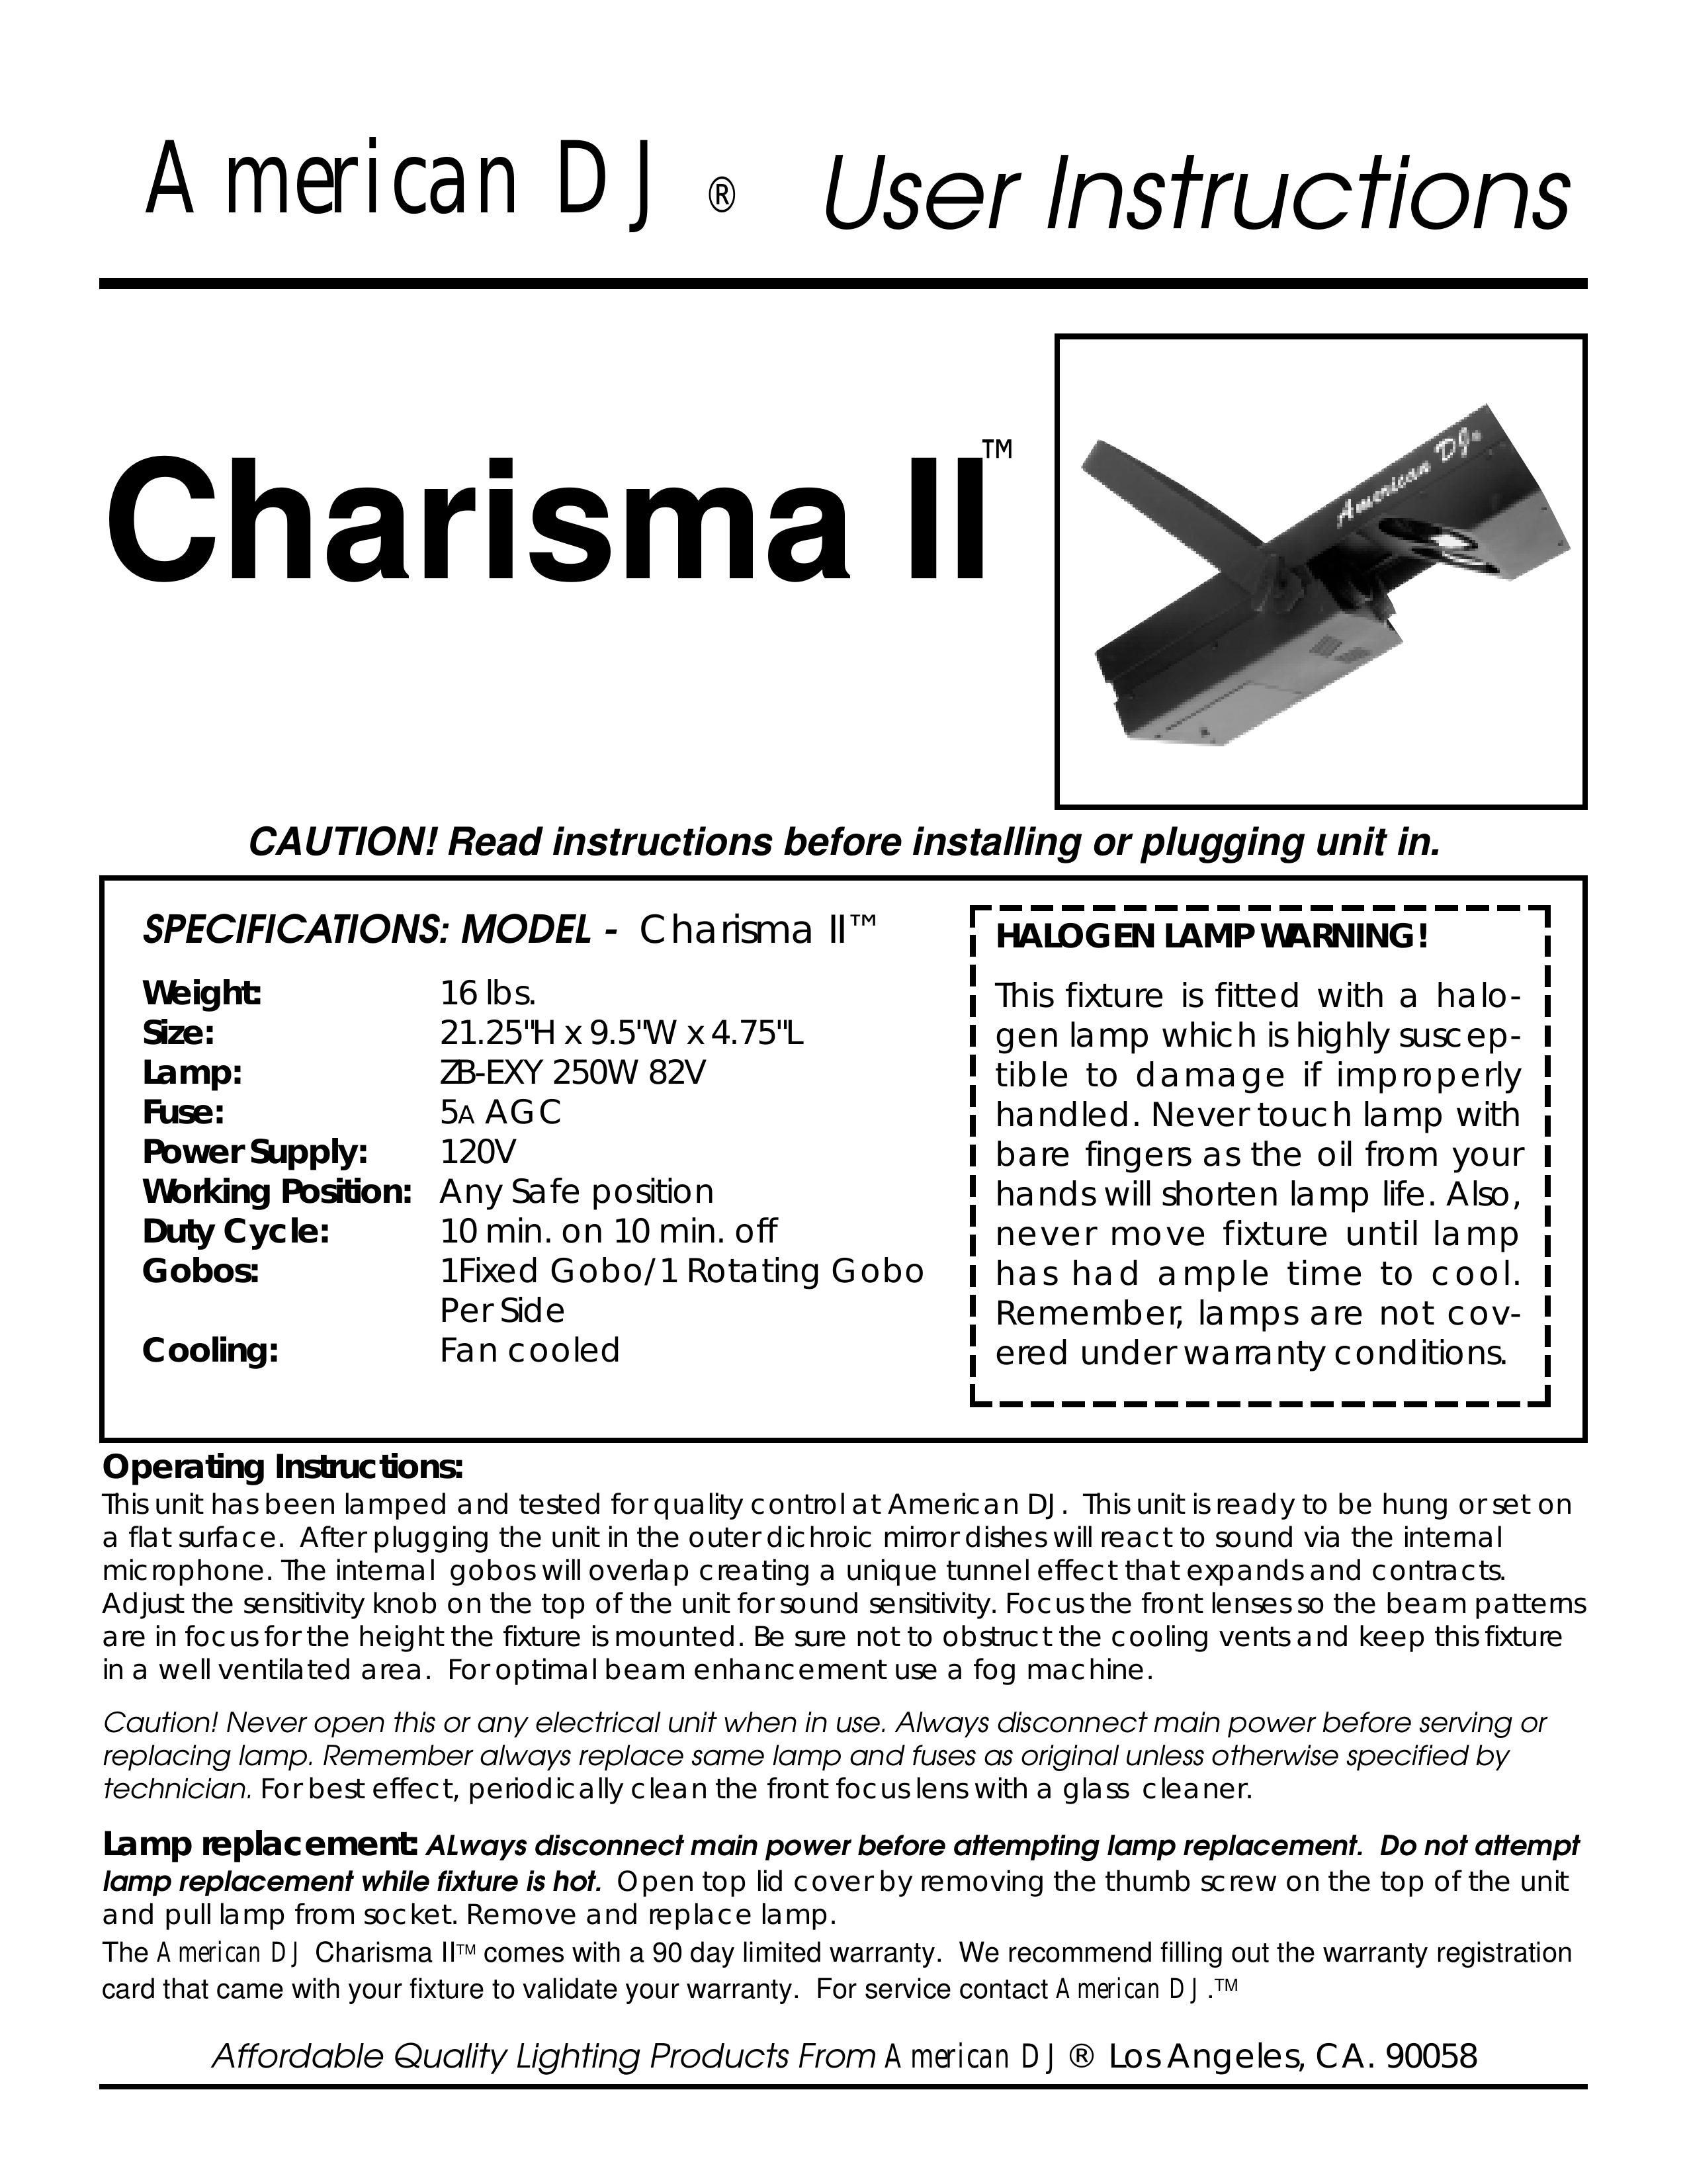 American DJ Charisma DJ Equipment User Manual